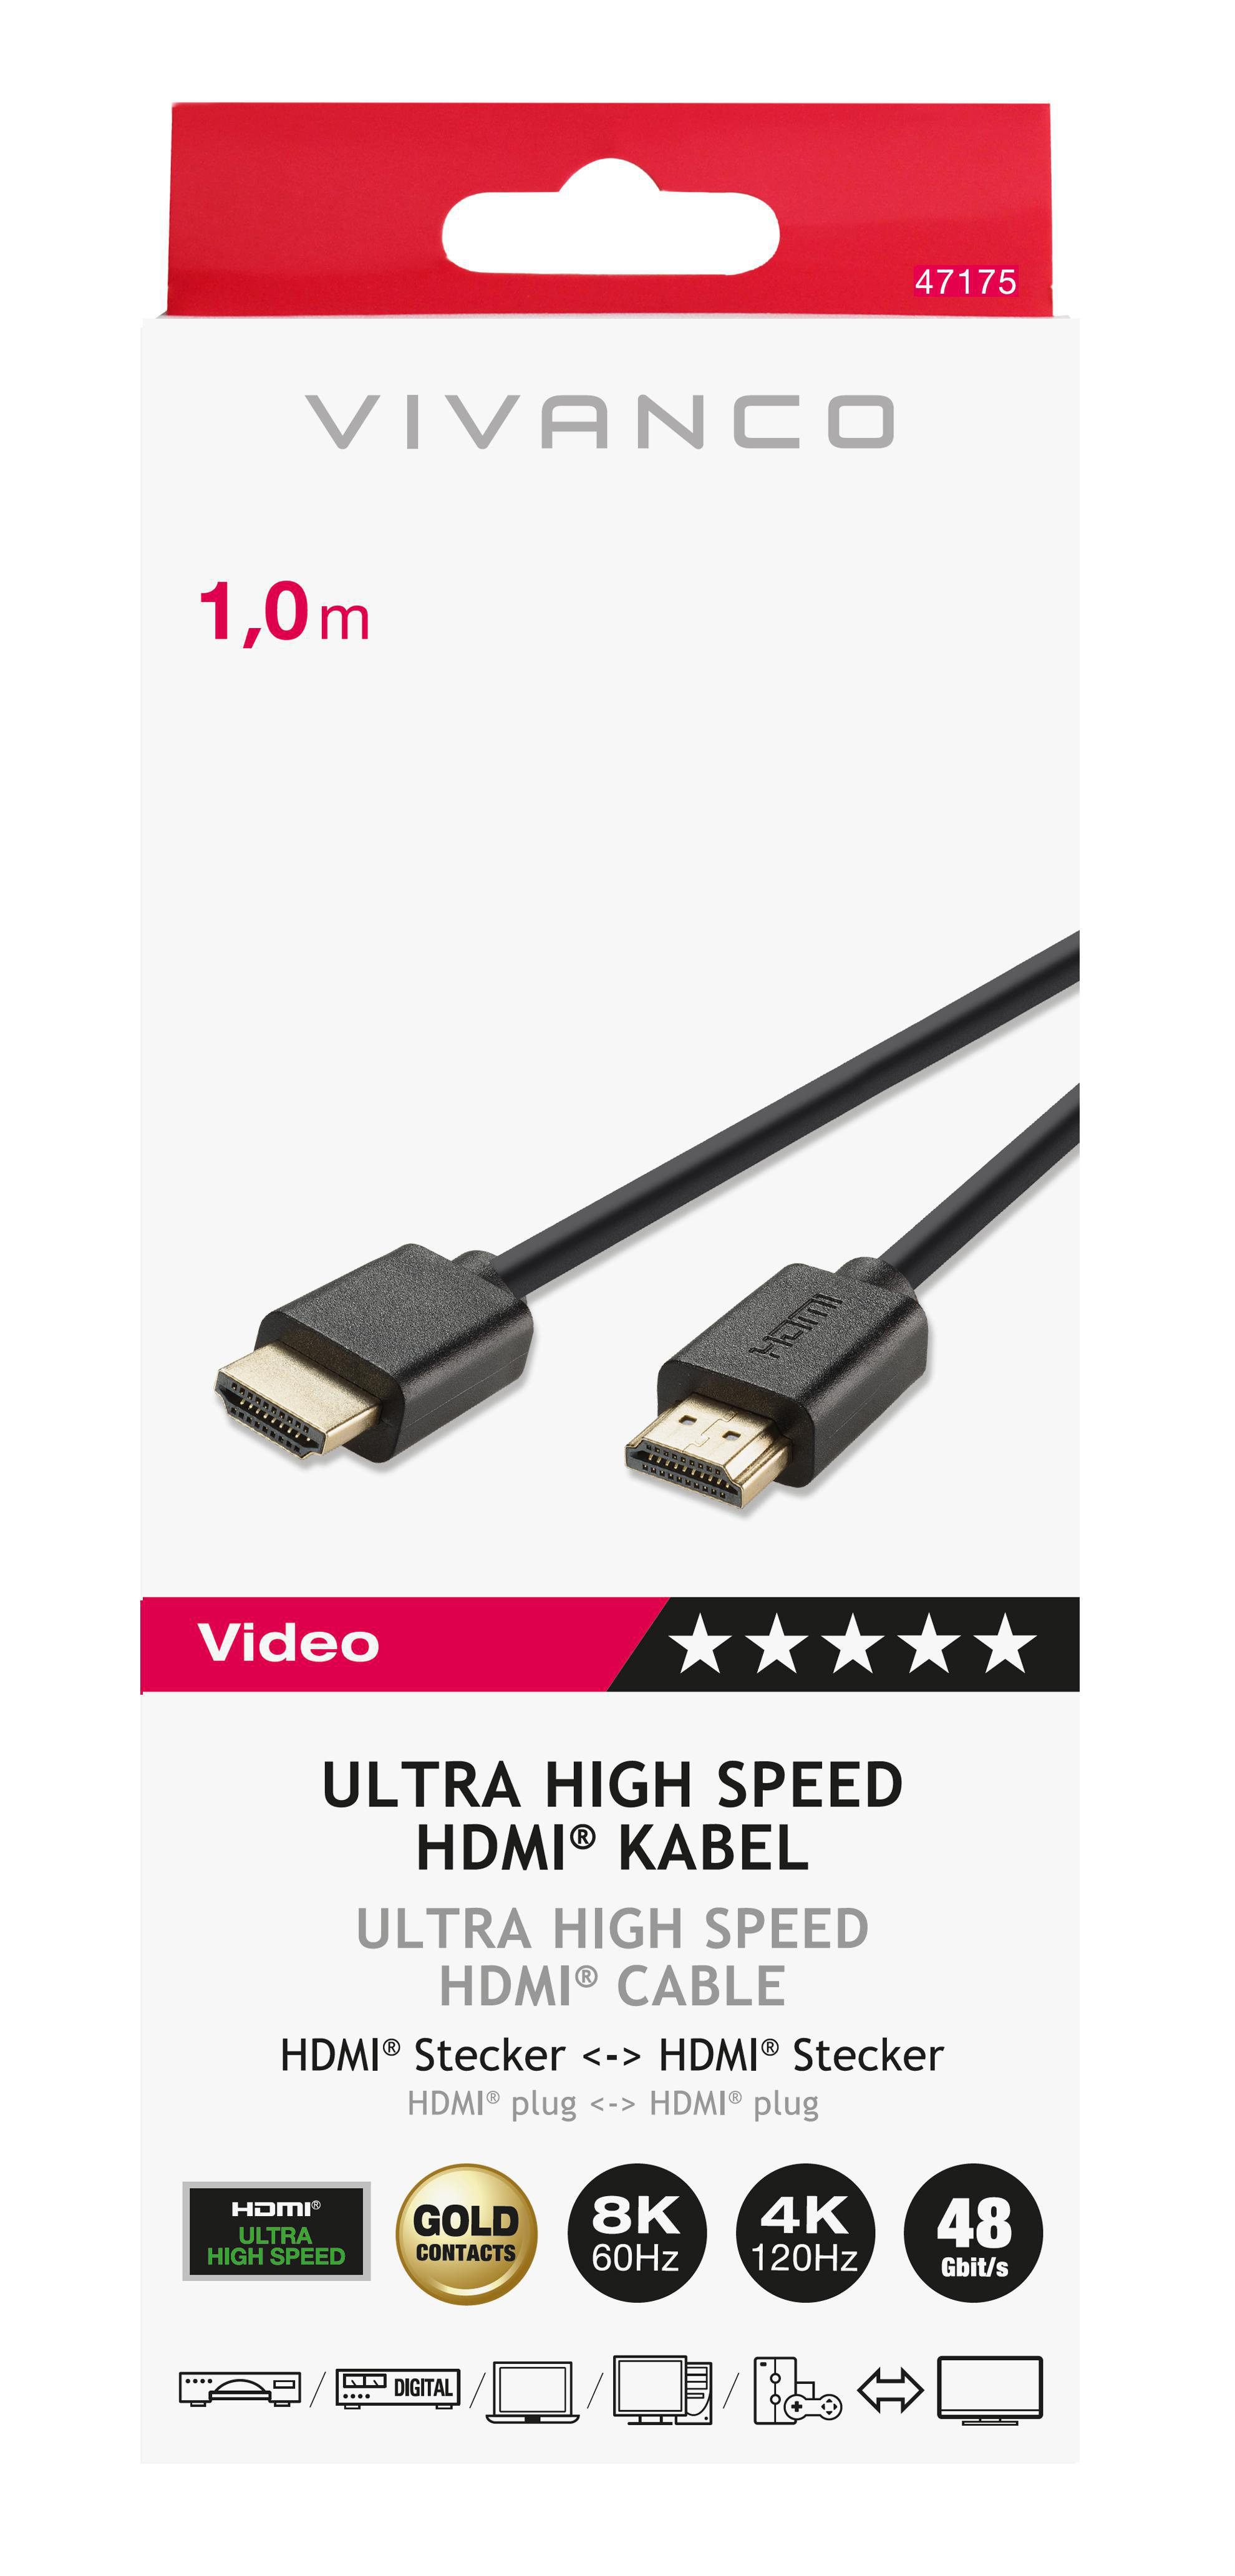 HDMI Kabel, VIVANCO 1 m 47175,